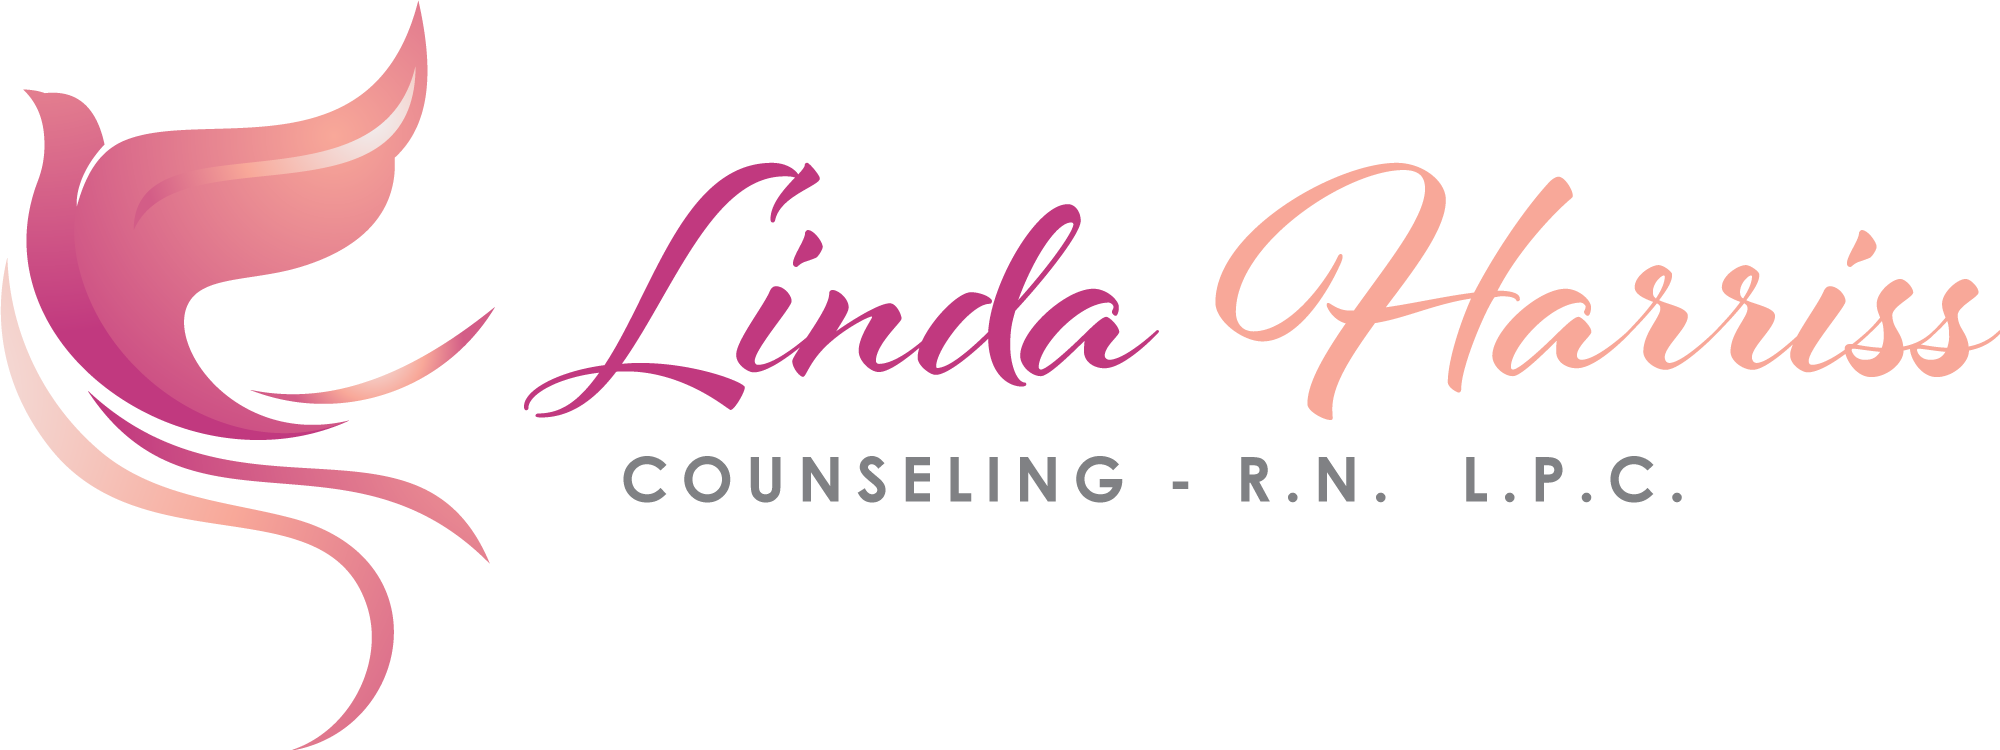 Linda Harriss Counseling